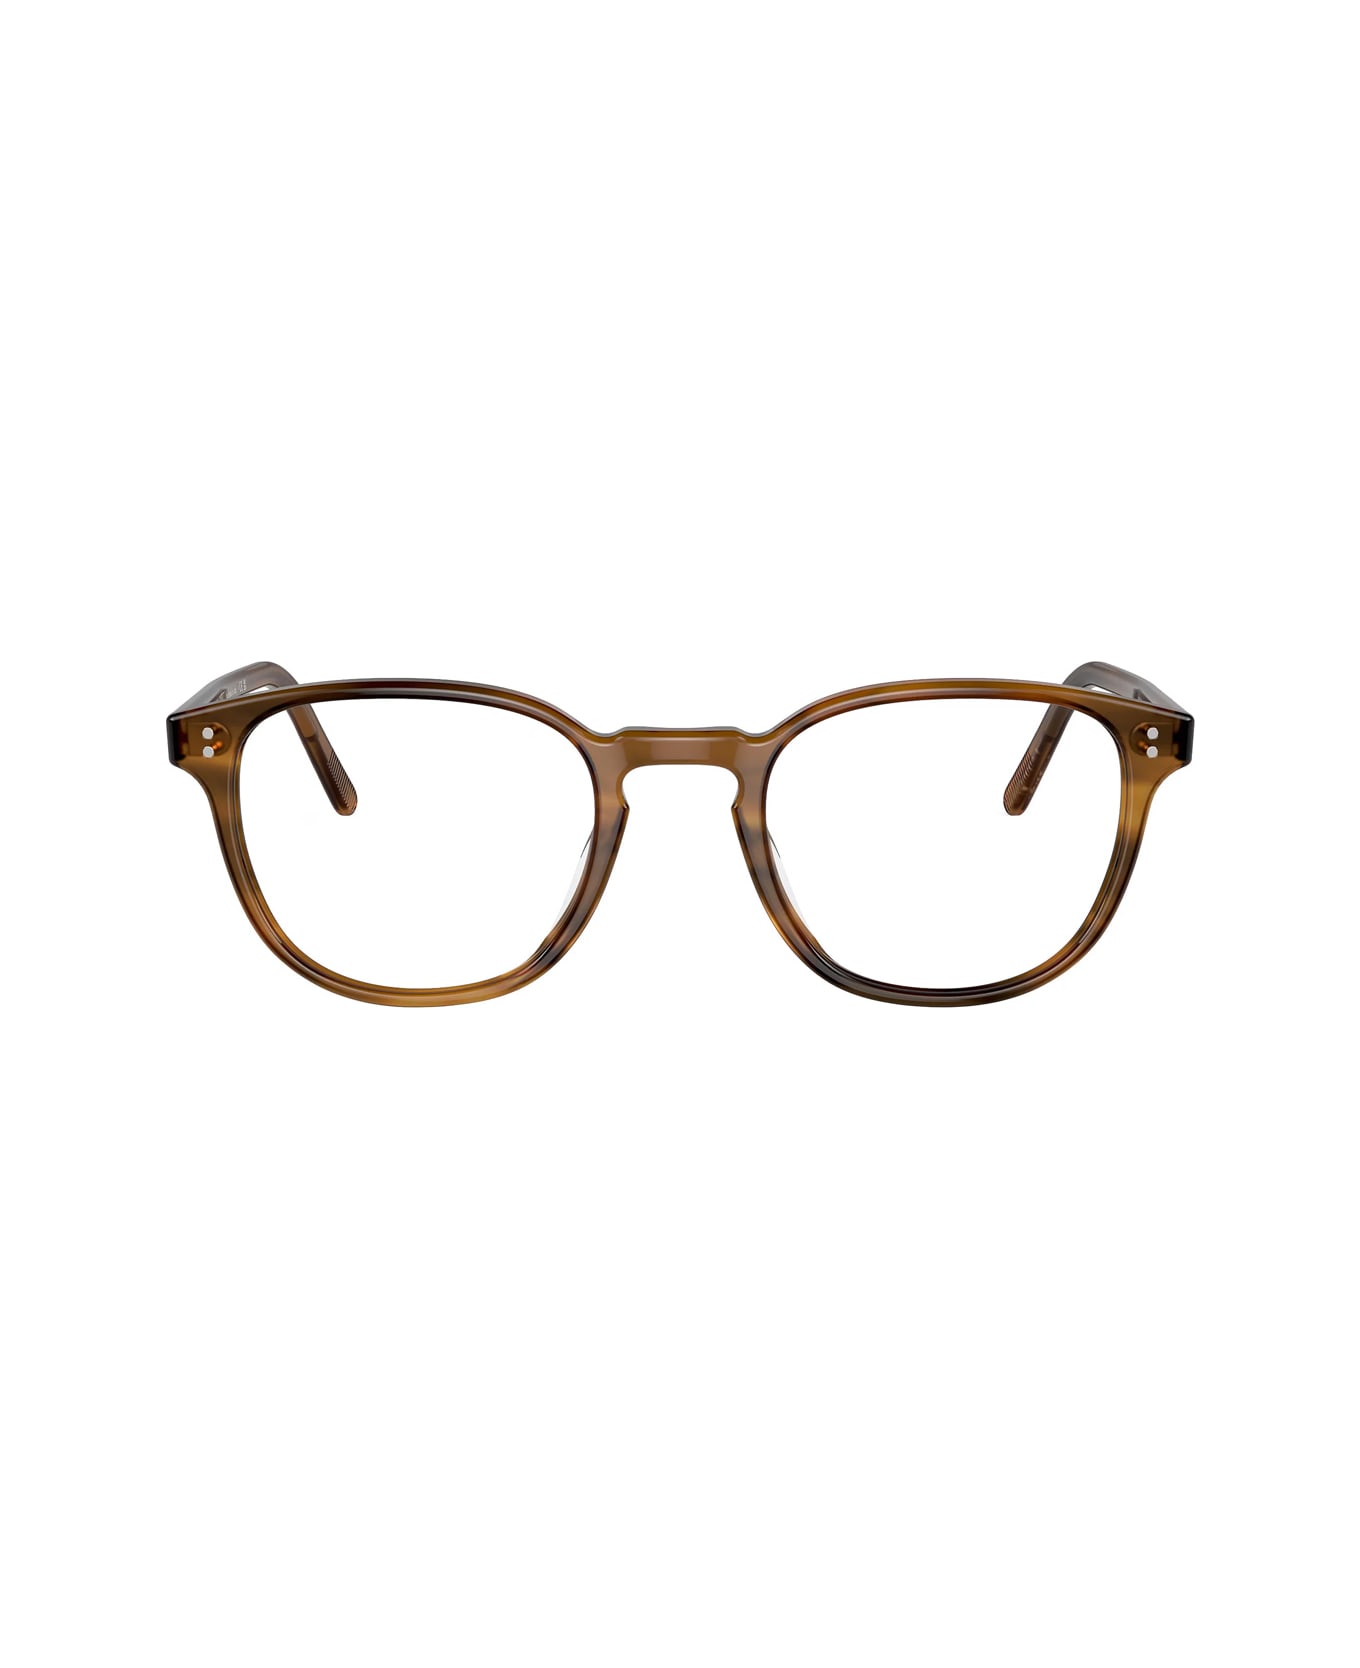 Oliver Peoples Ov5219 - Fairmont 1011 Glasses - Marrone アイウェア